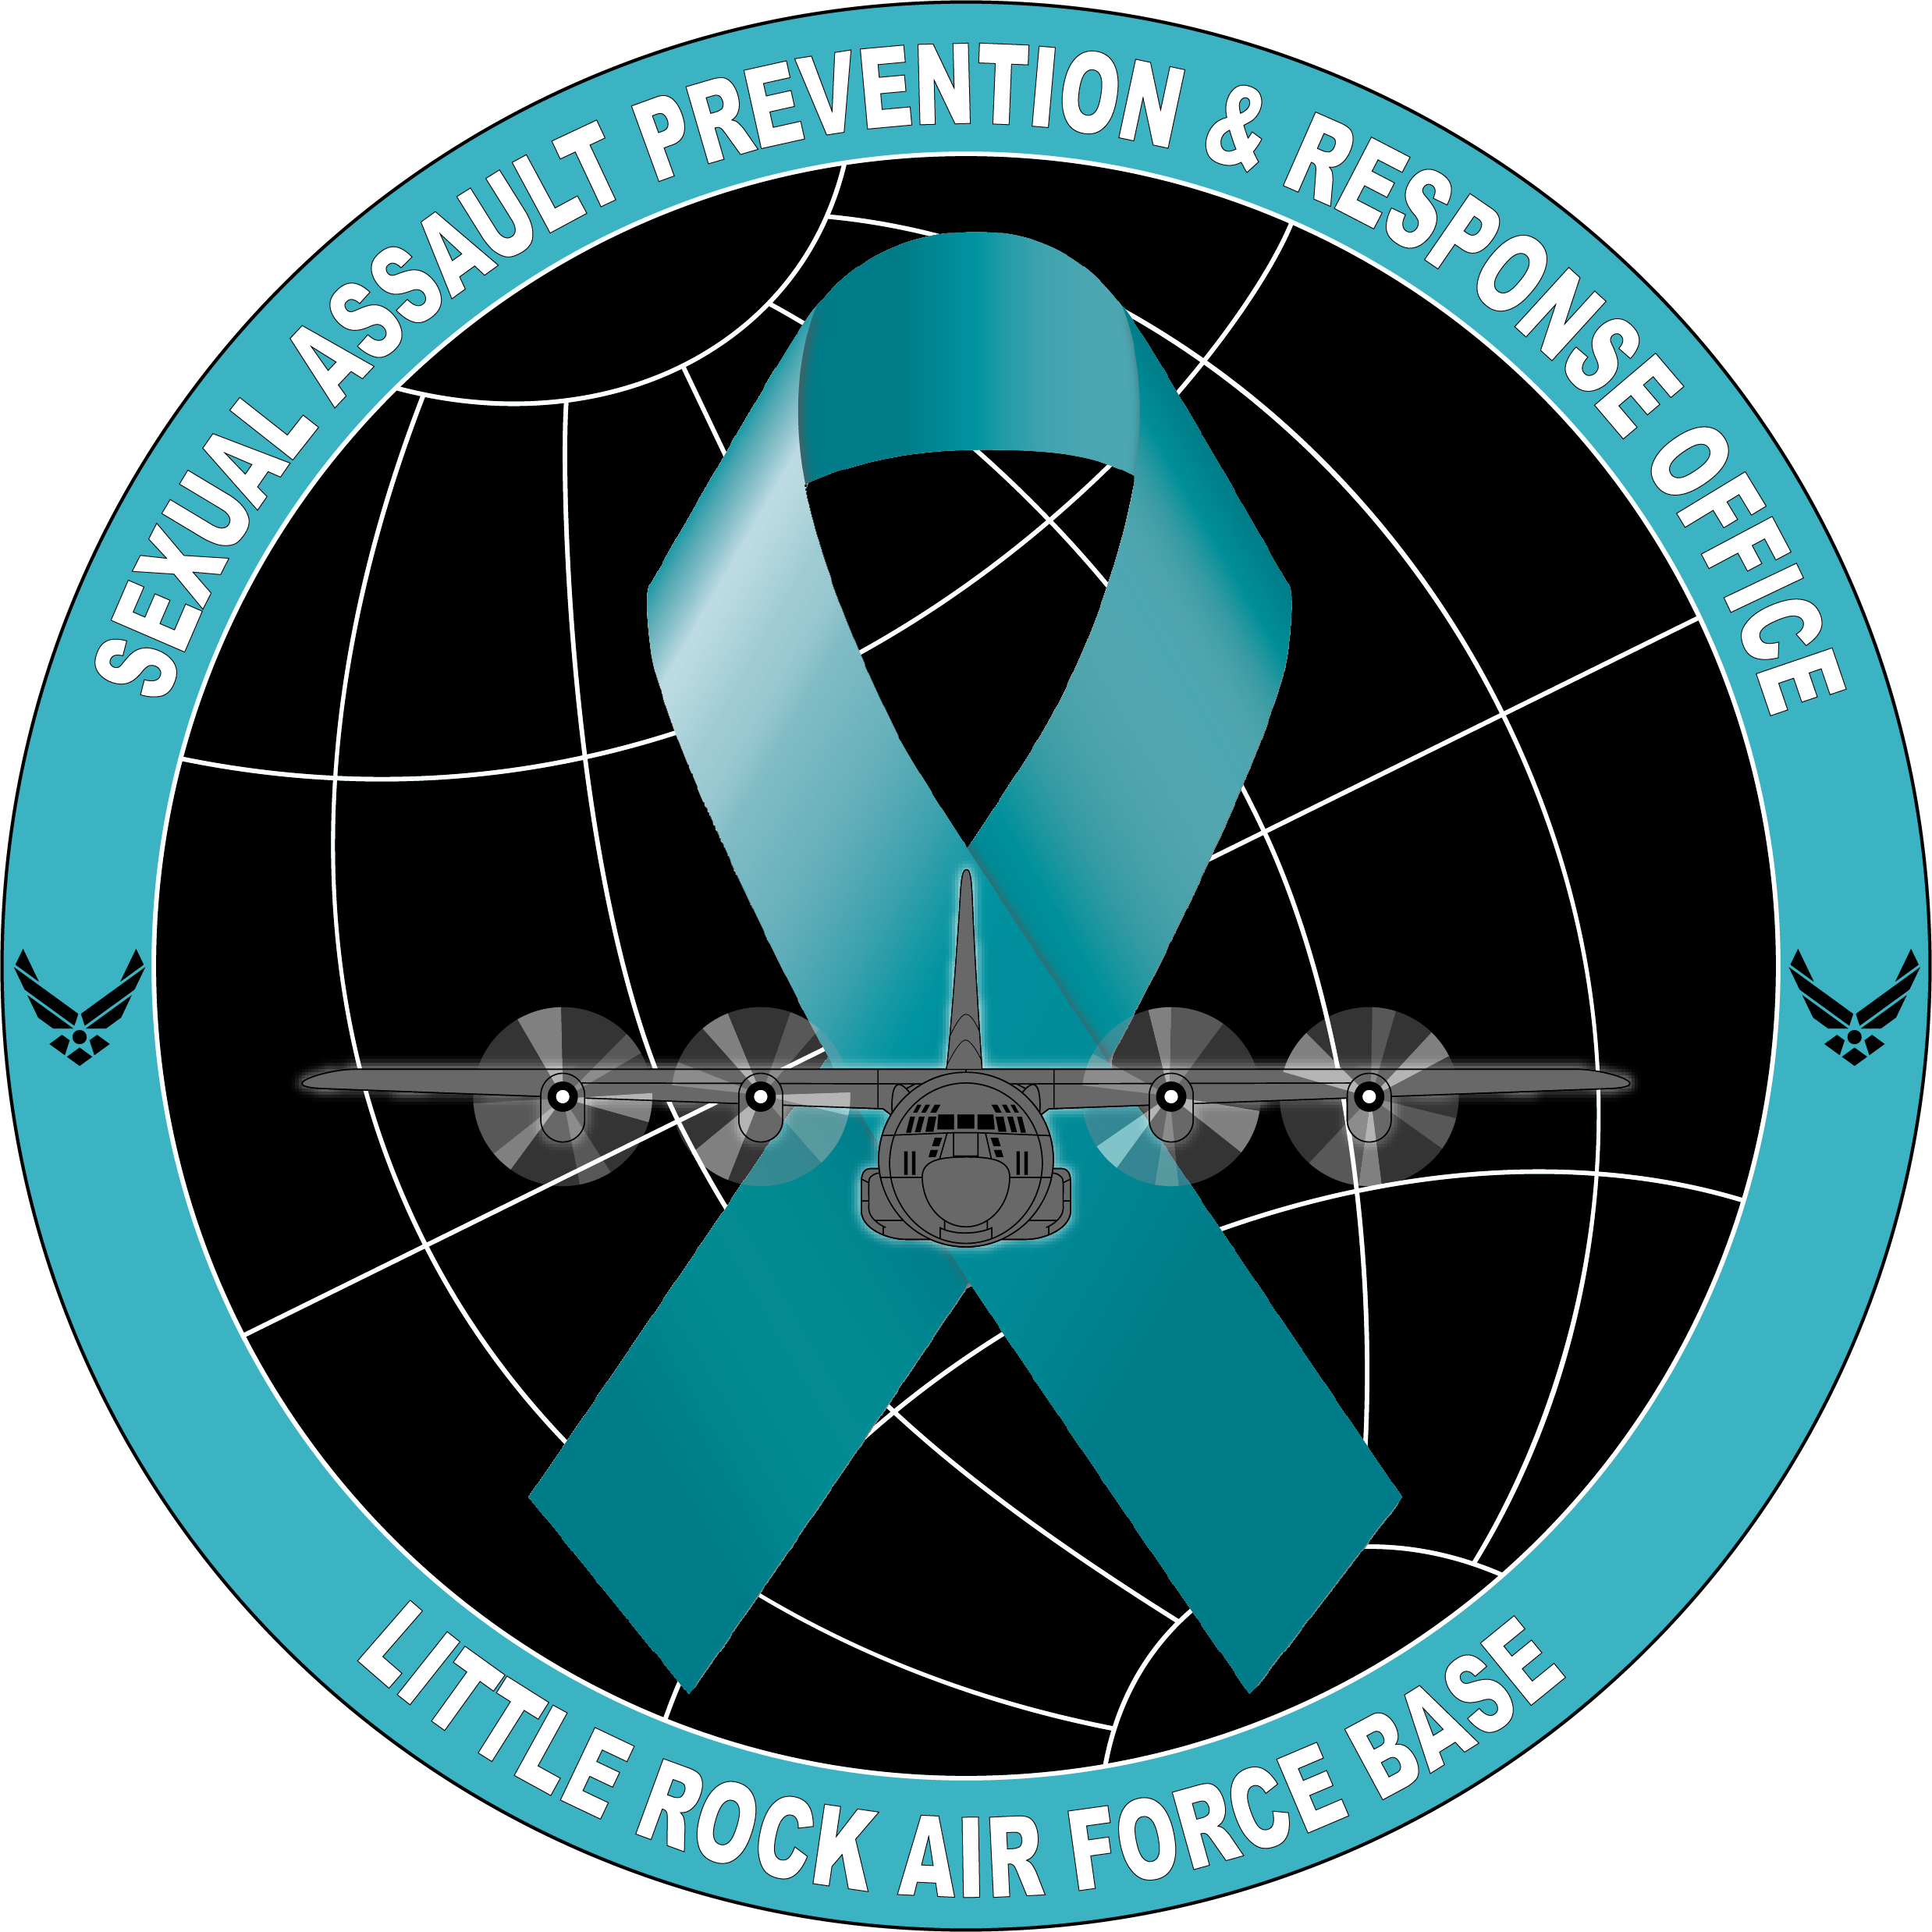 SAPR Logo